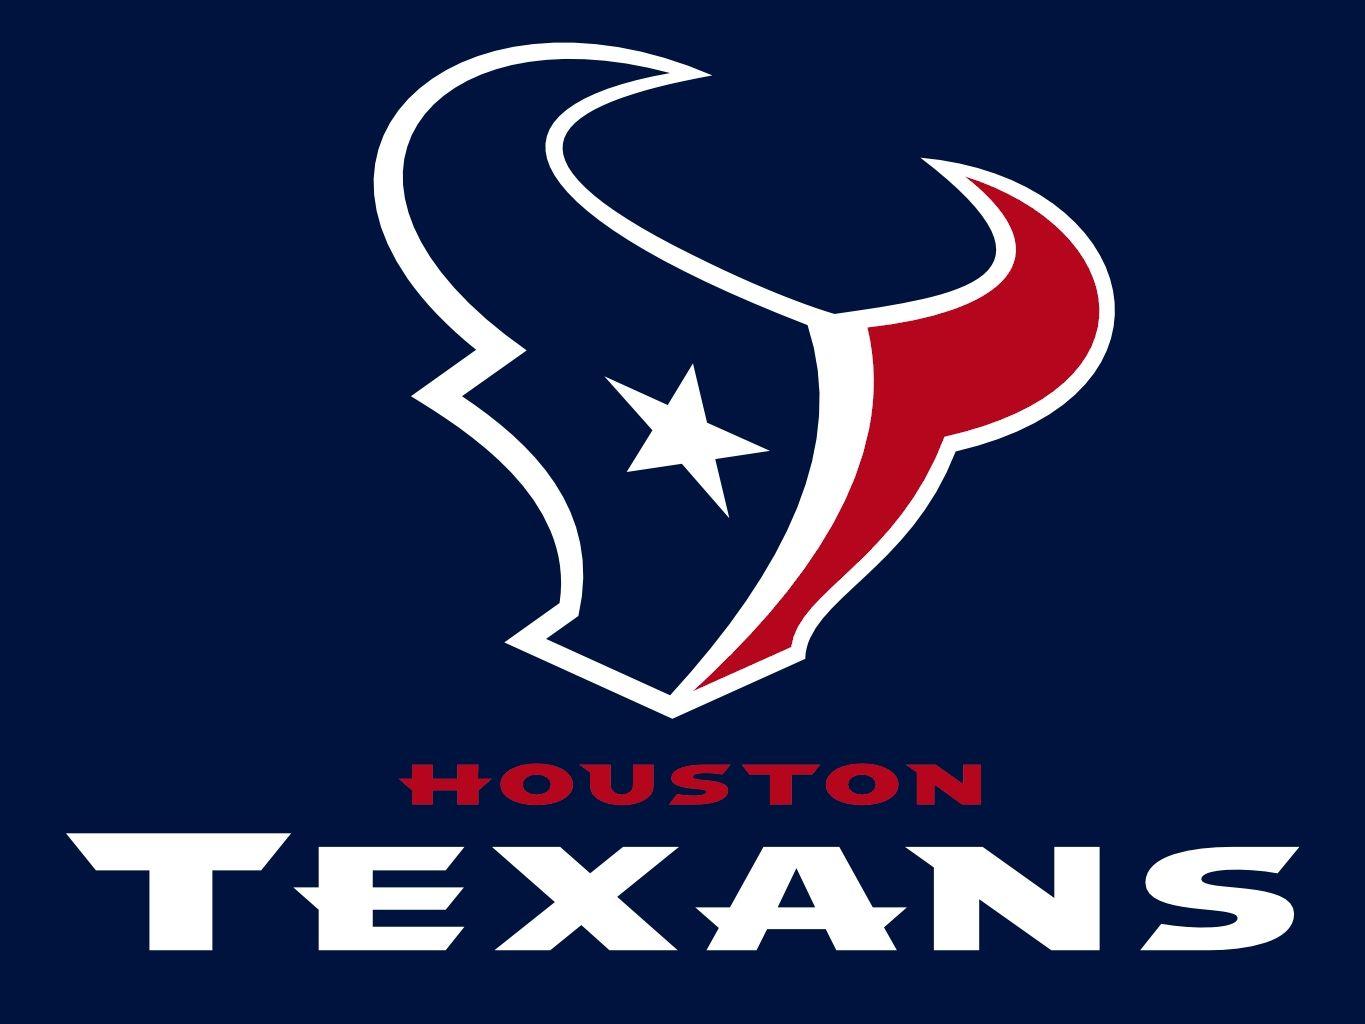 NFL Texans Logo - Free Houston Texans Logo, Download Free Clip Art, Free Clip Art